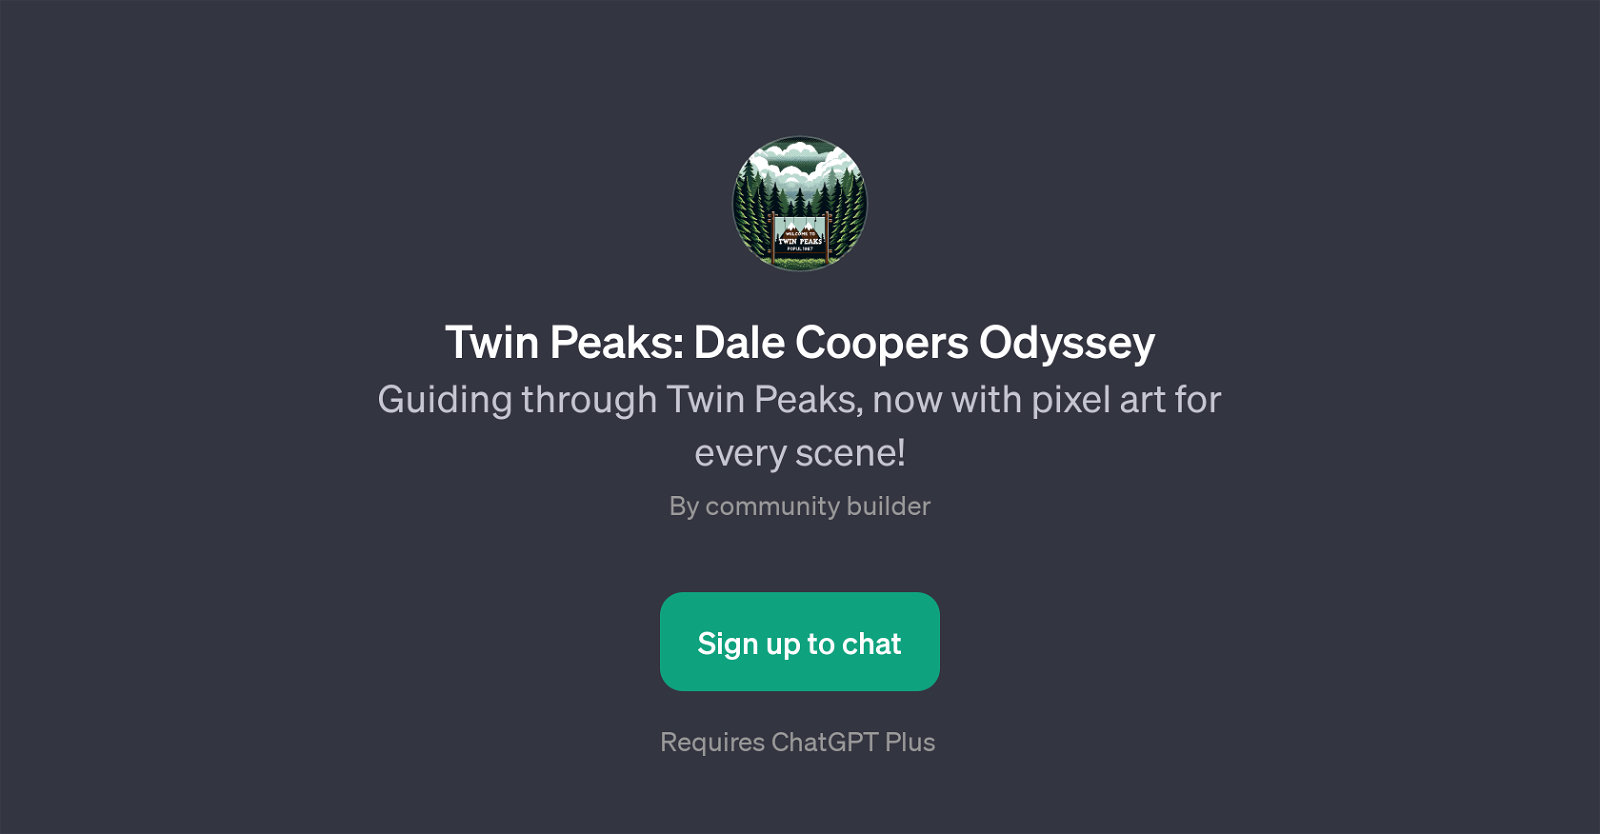 Twin Peaks: Dale Coopers Odyssey website